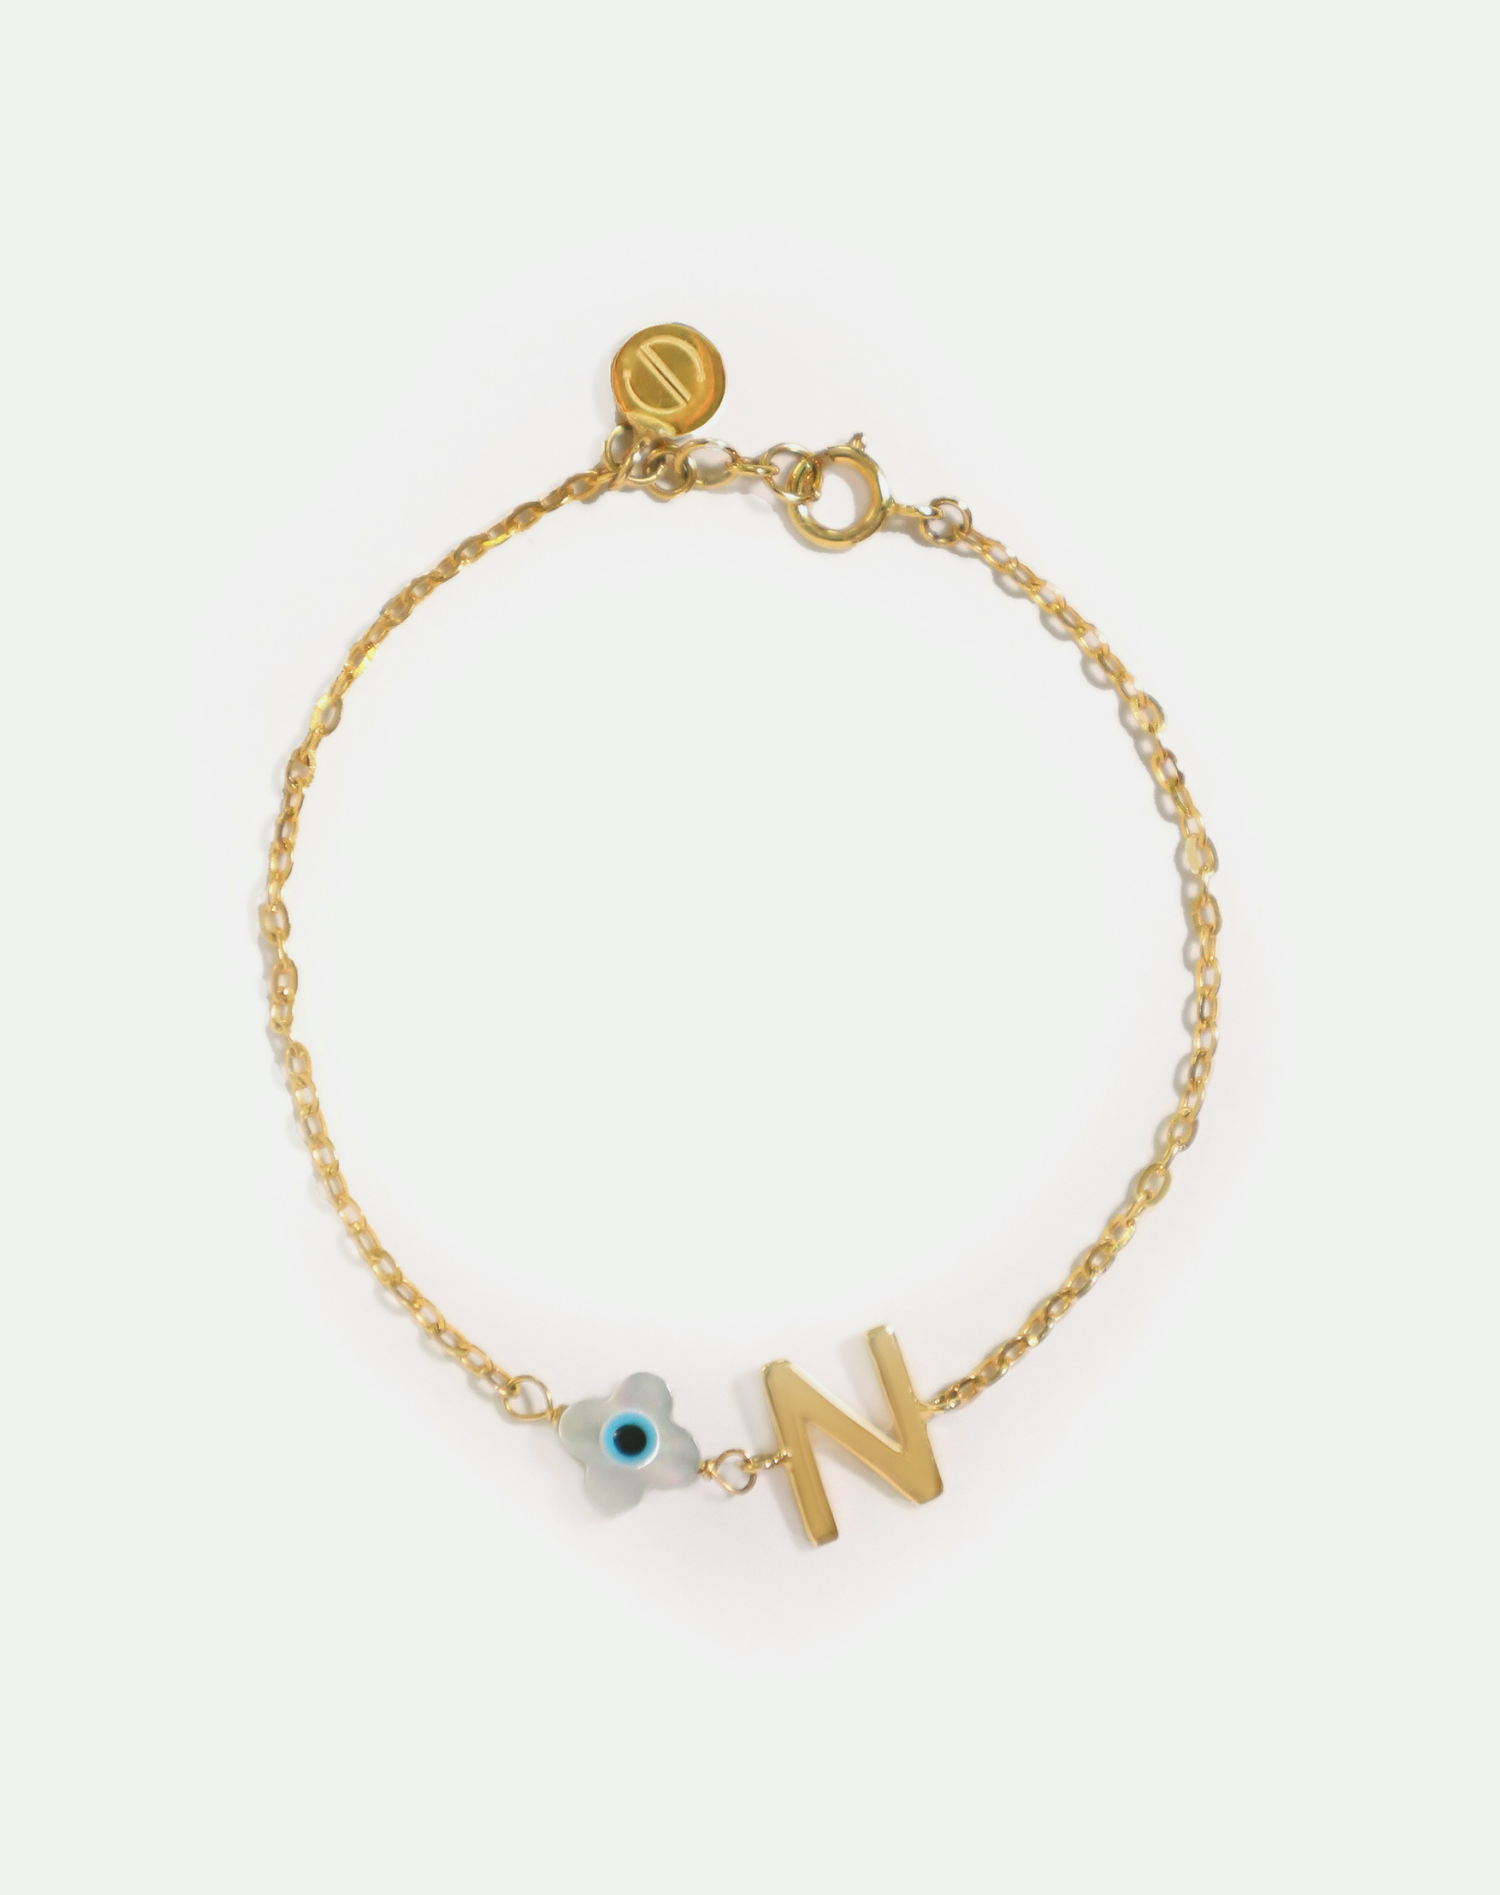 Letter N multicolor stones bracelet